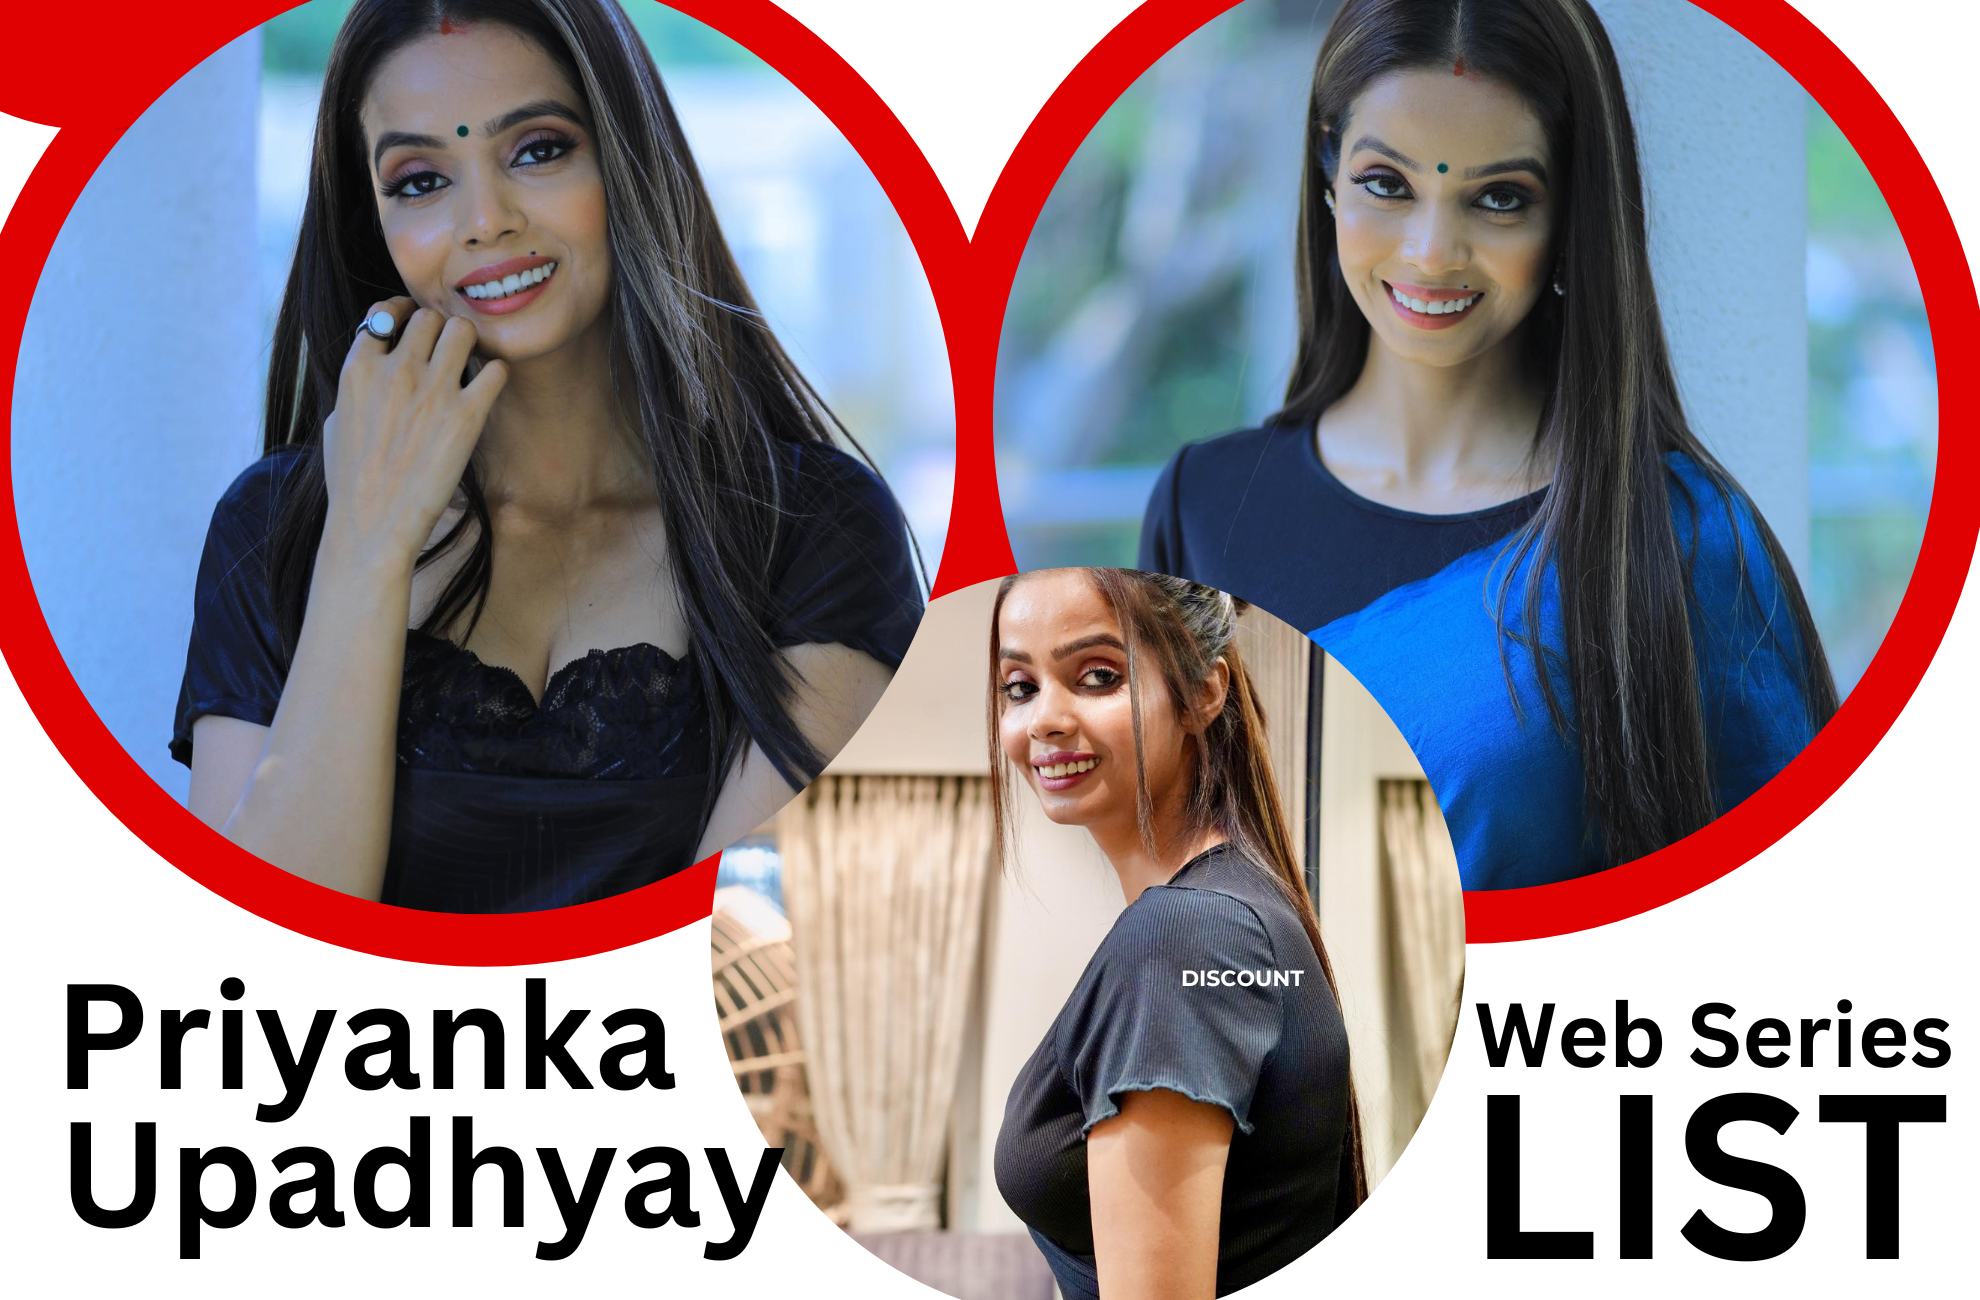 Priyanka Upadhyay Web Series List